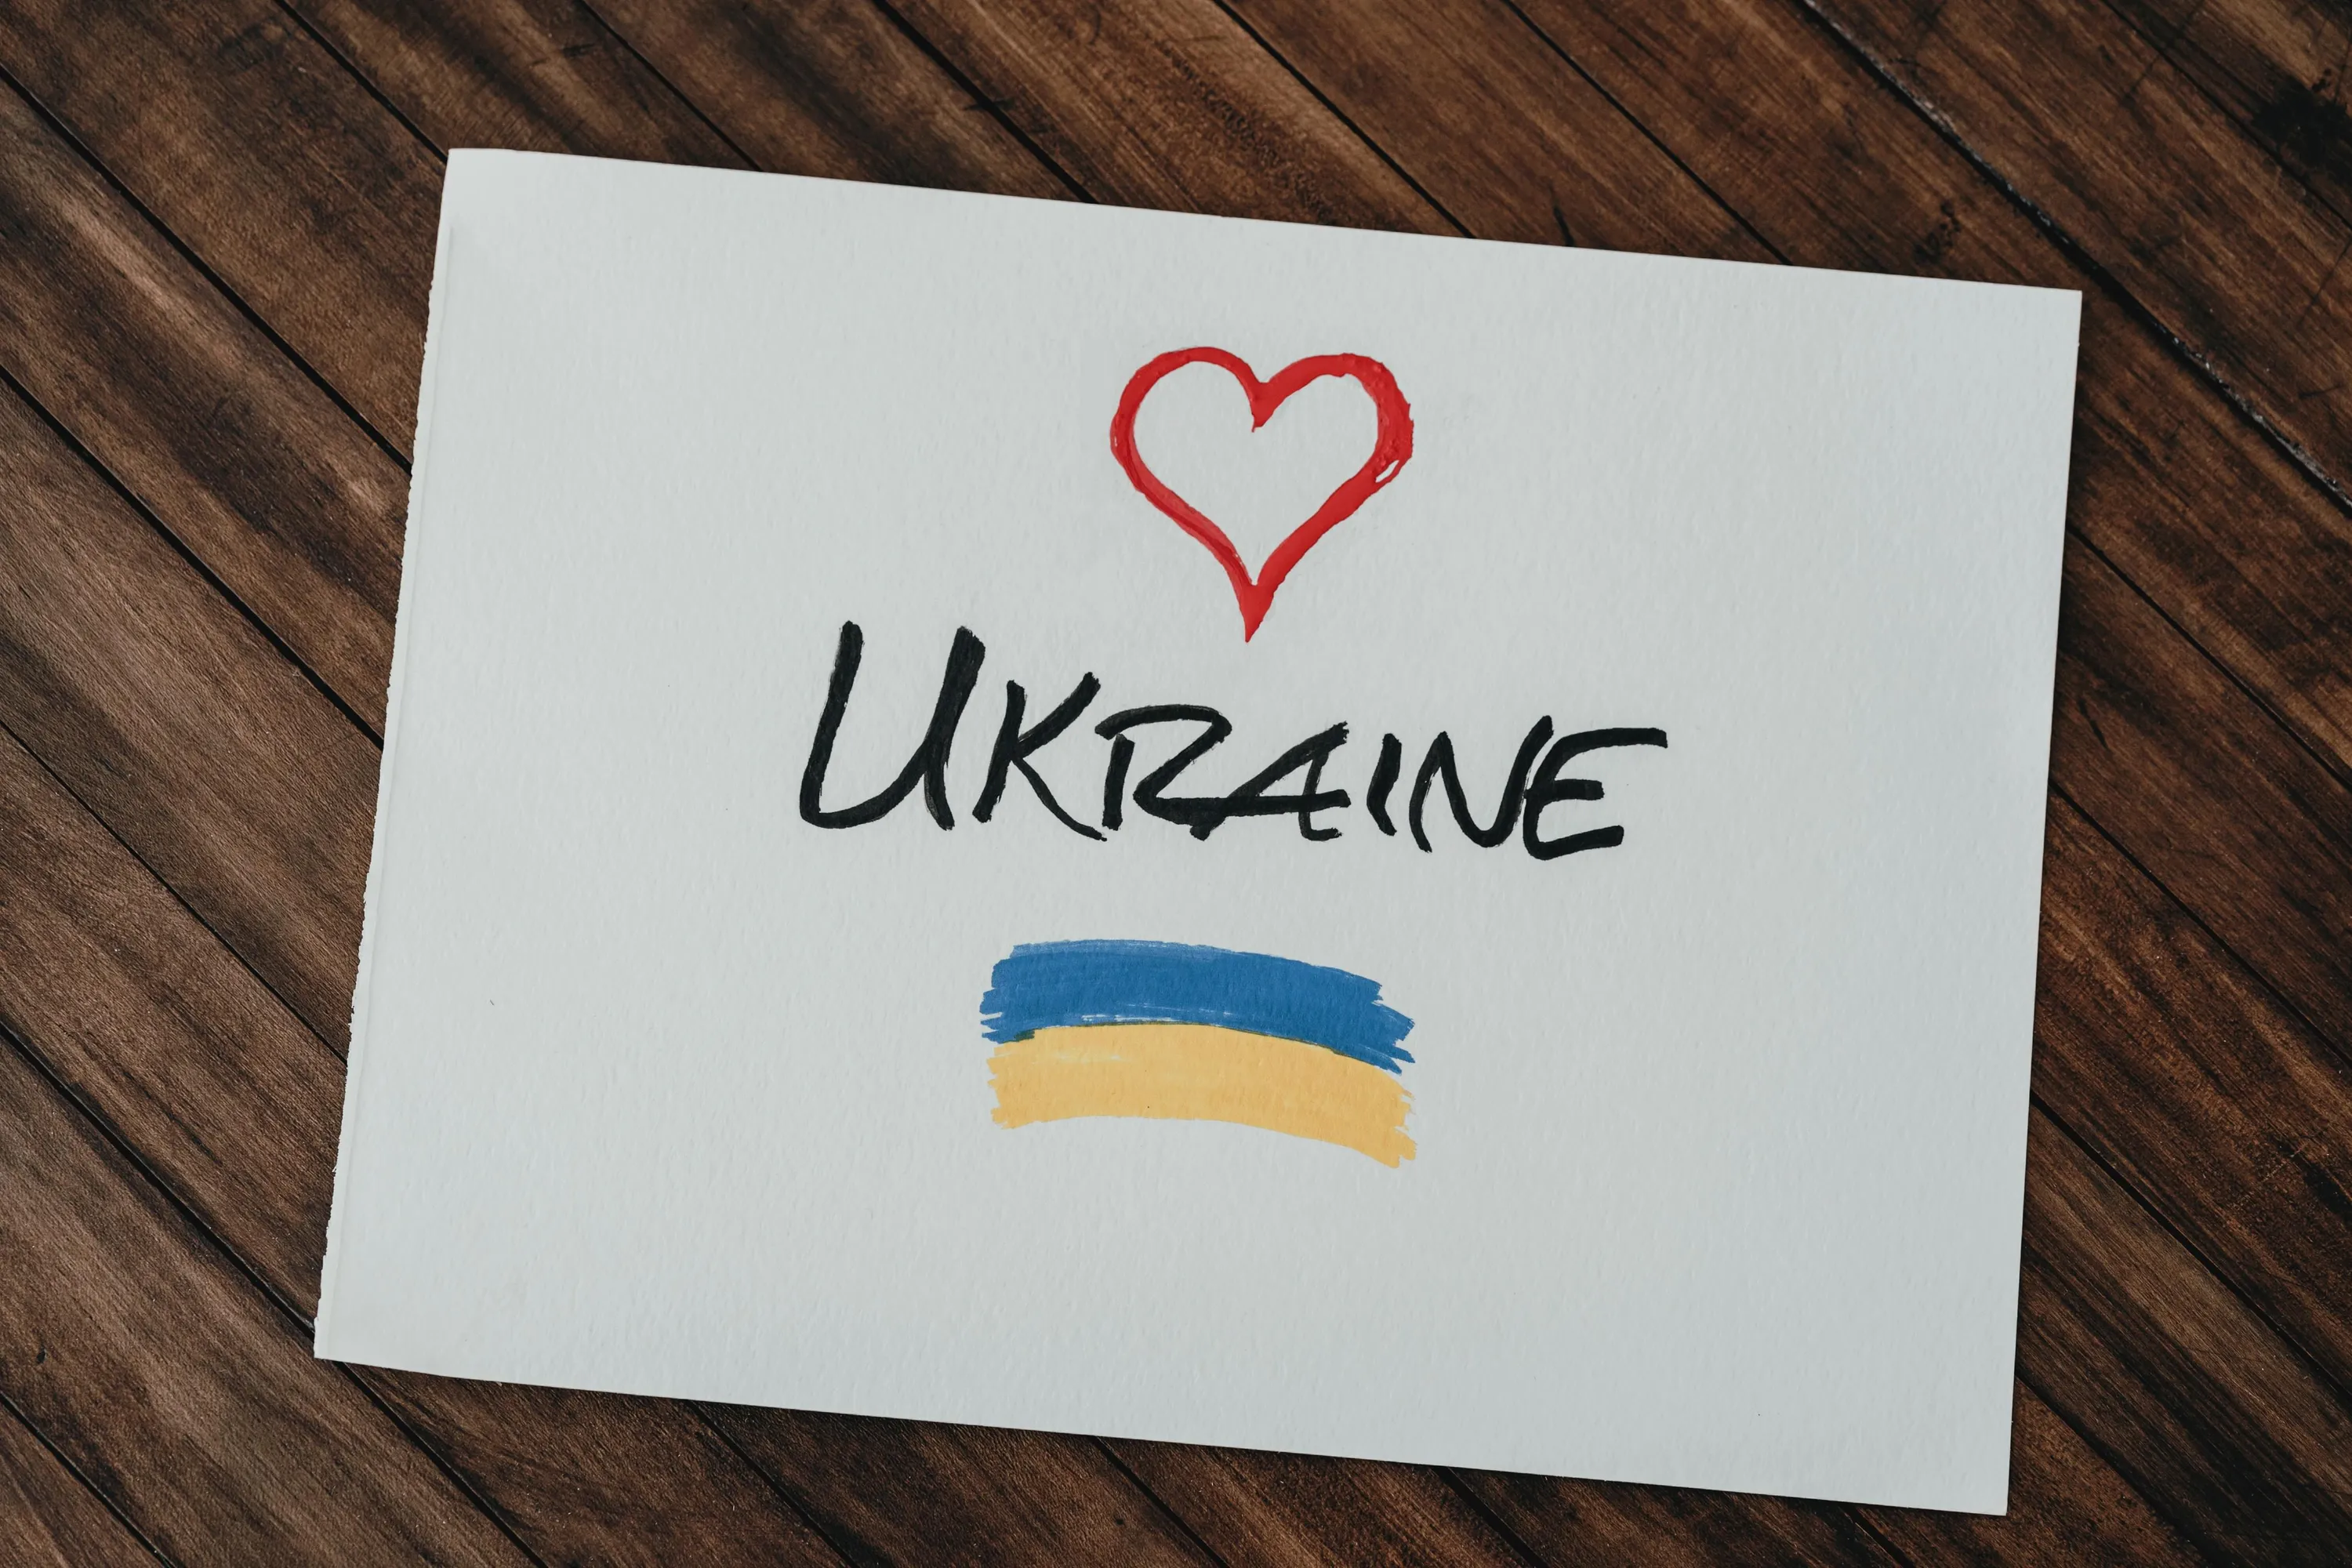 Donate to help Ukraine